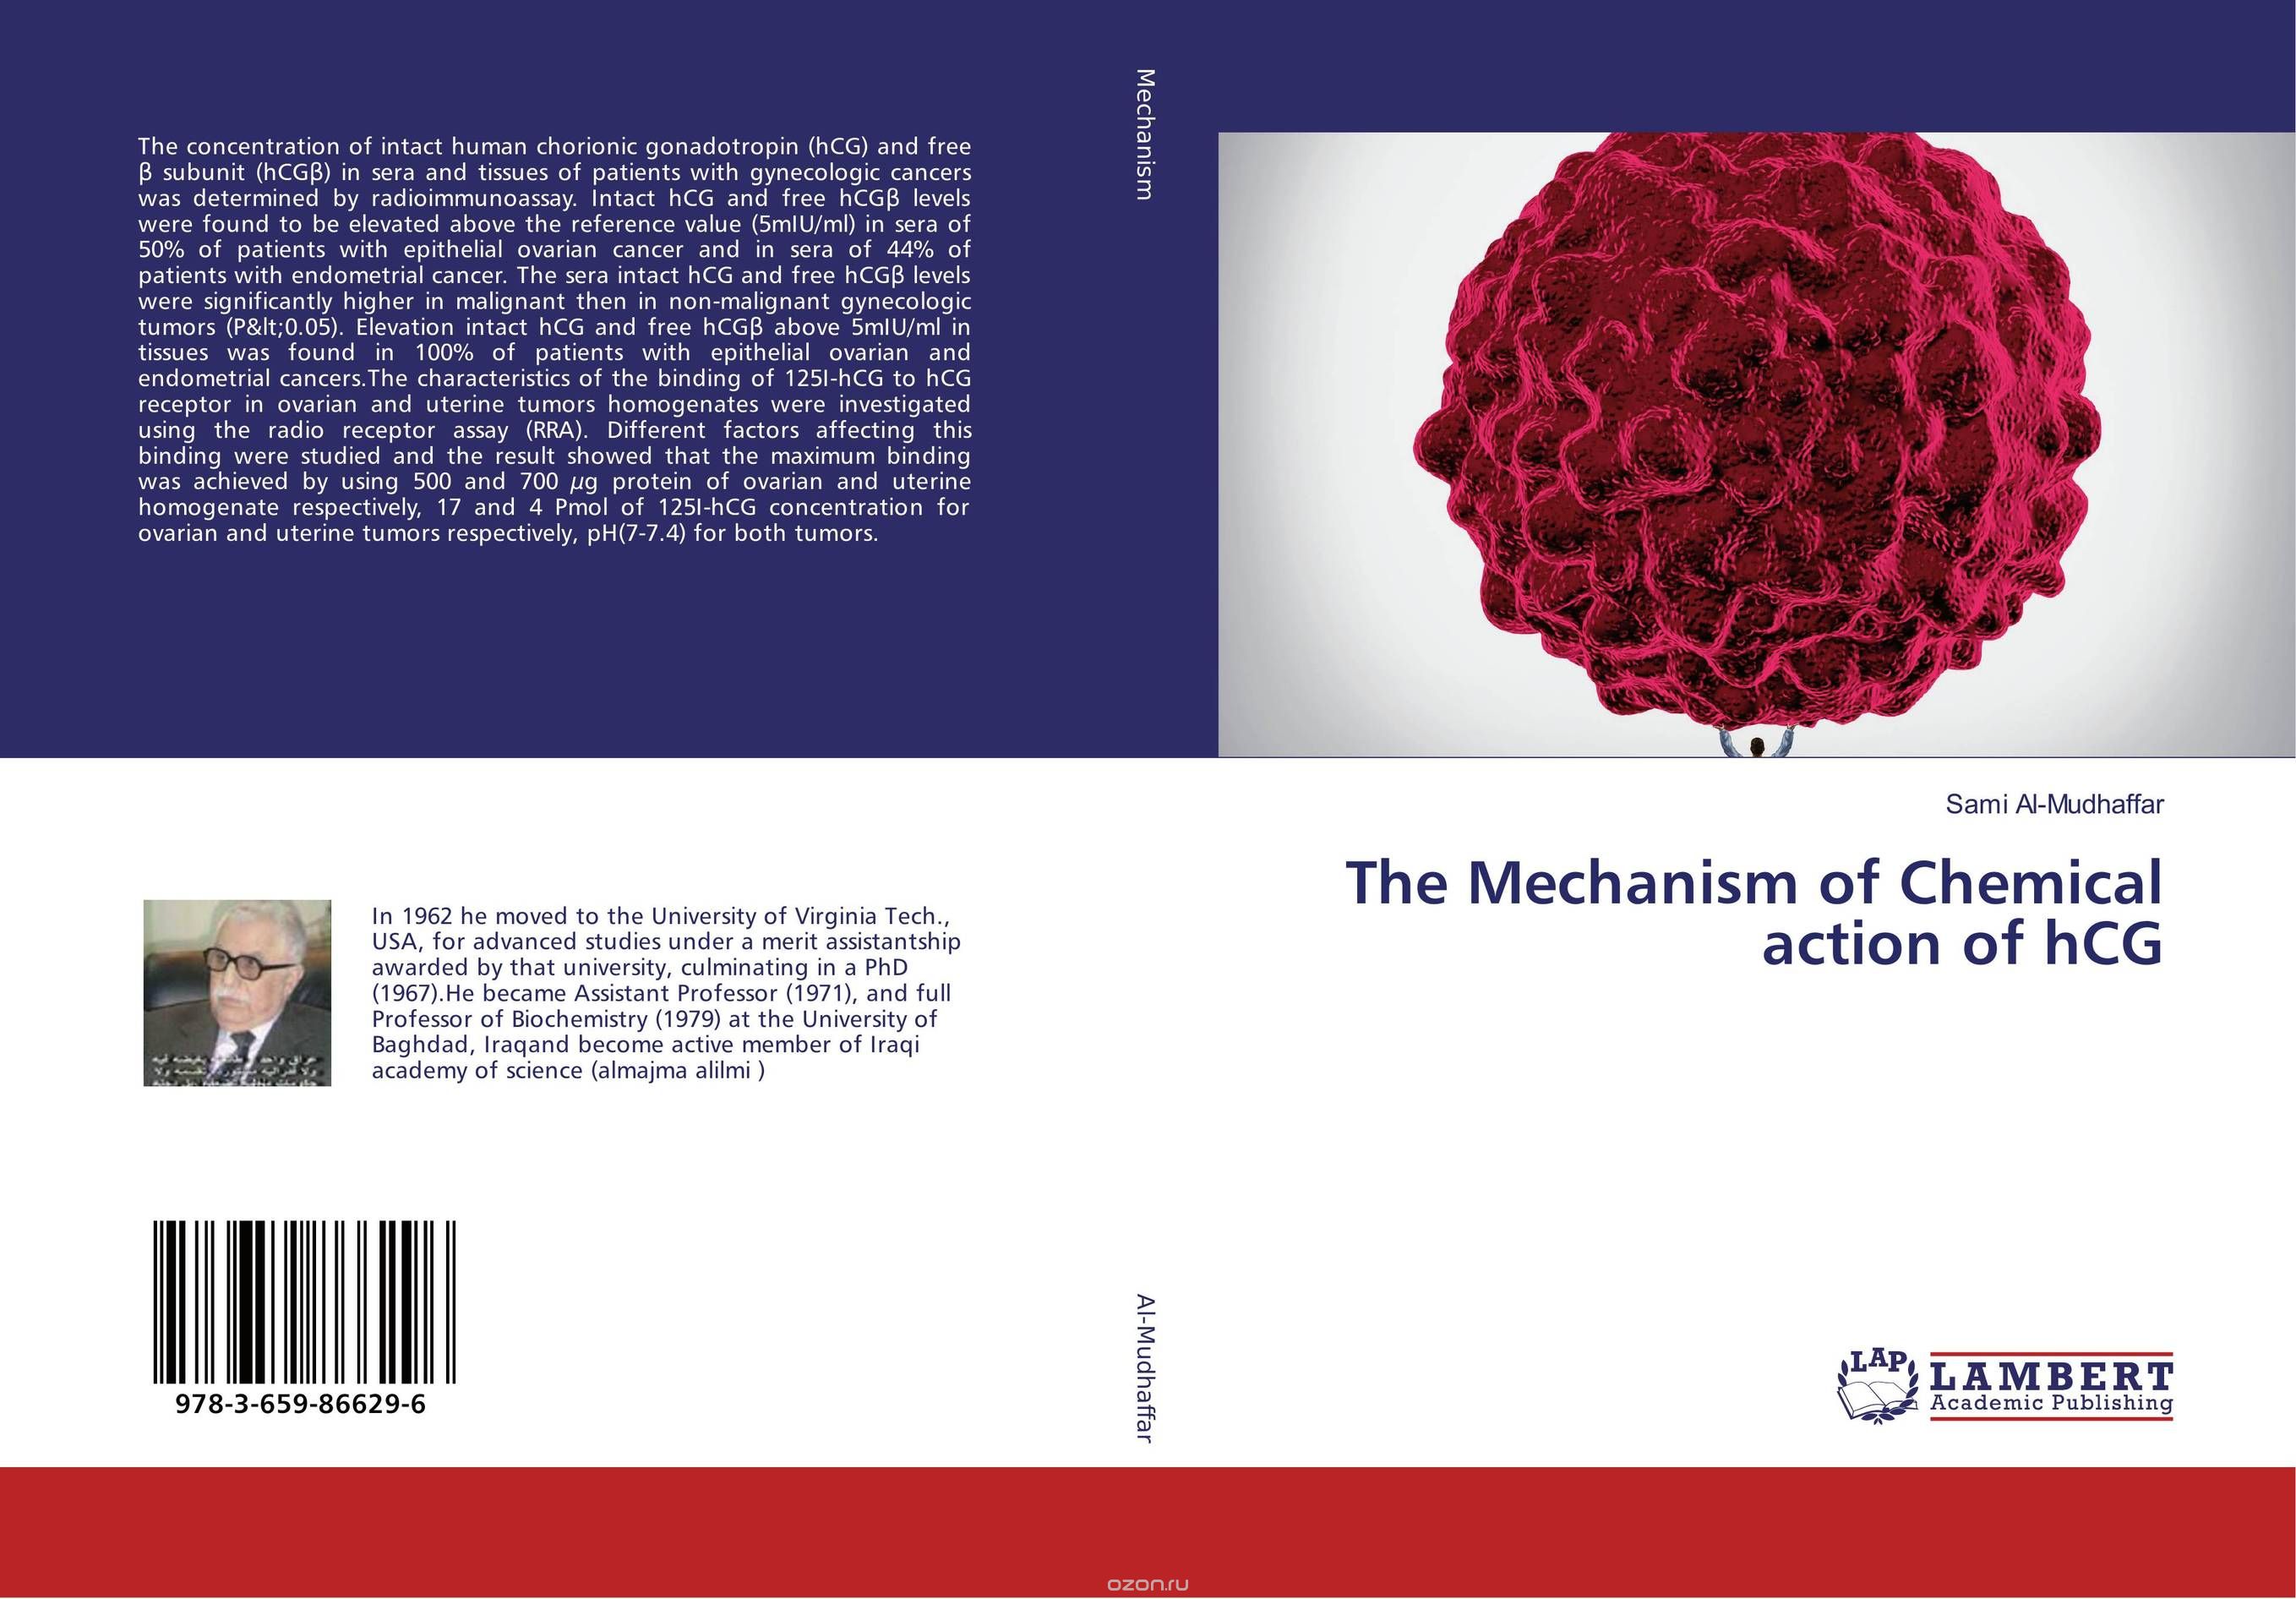 Скачать книгу "The Mechanism of Chemical action of hCG"